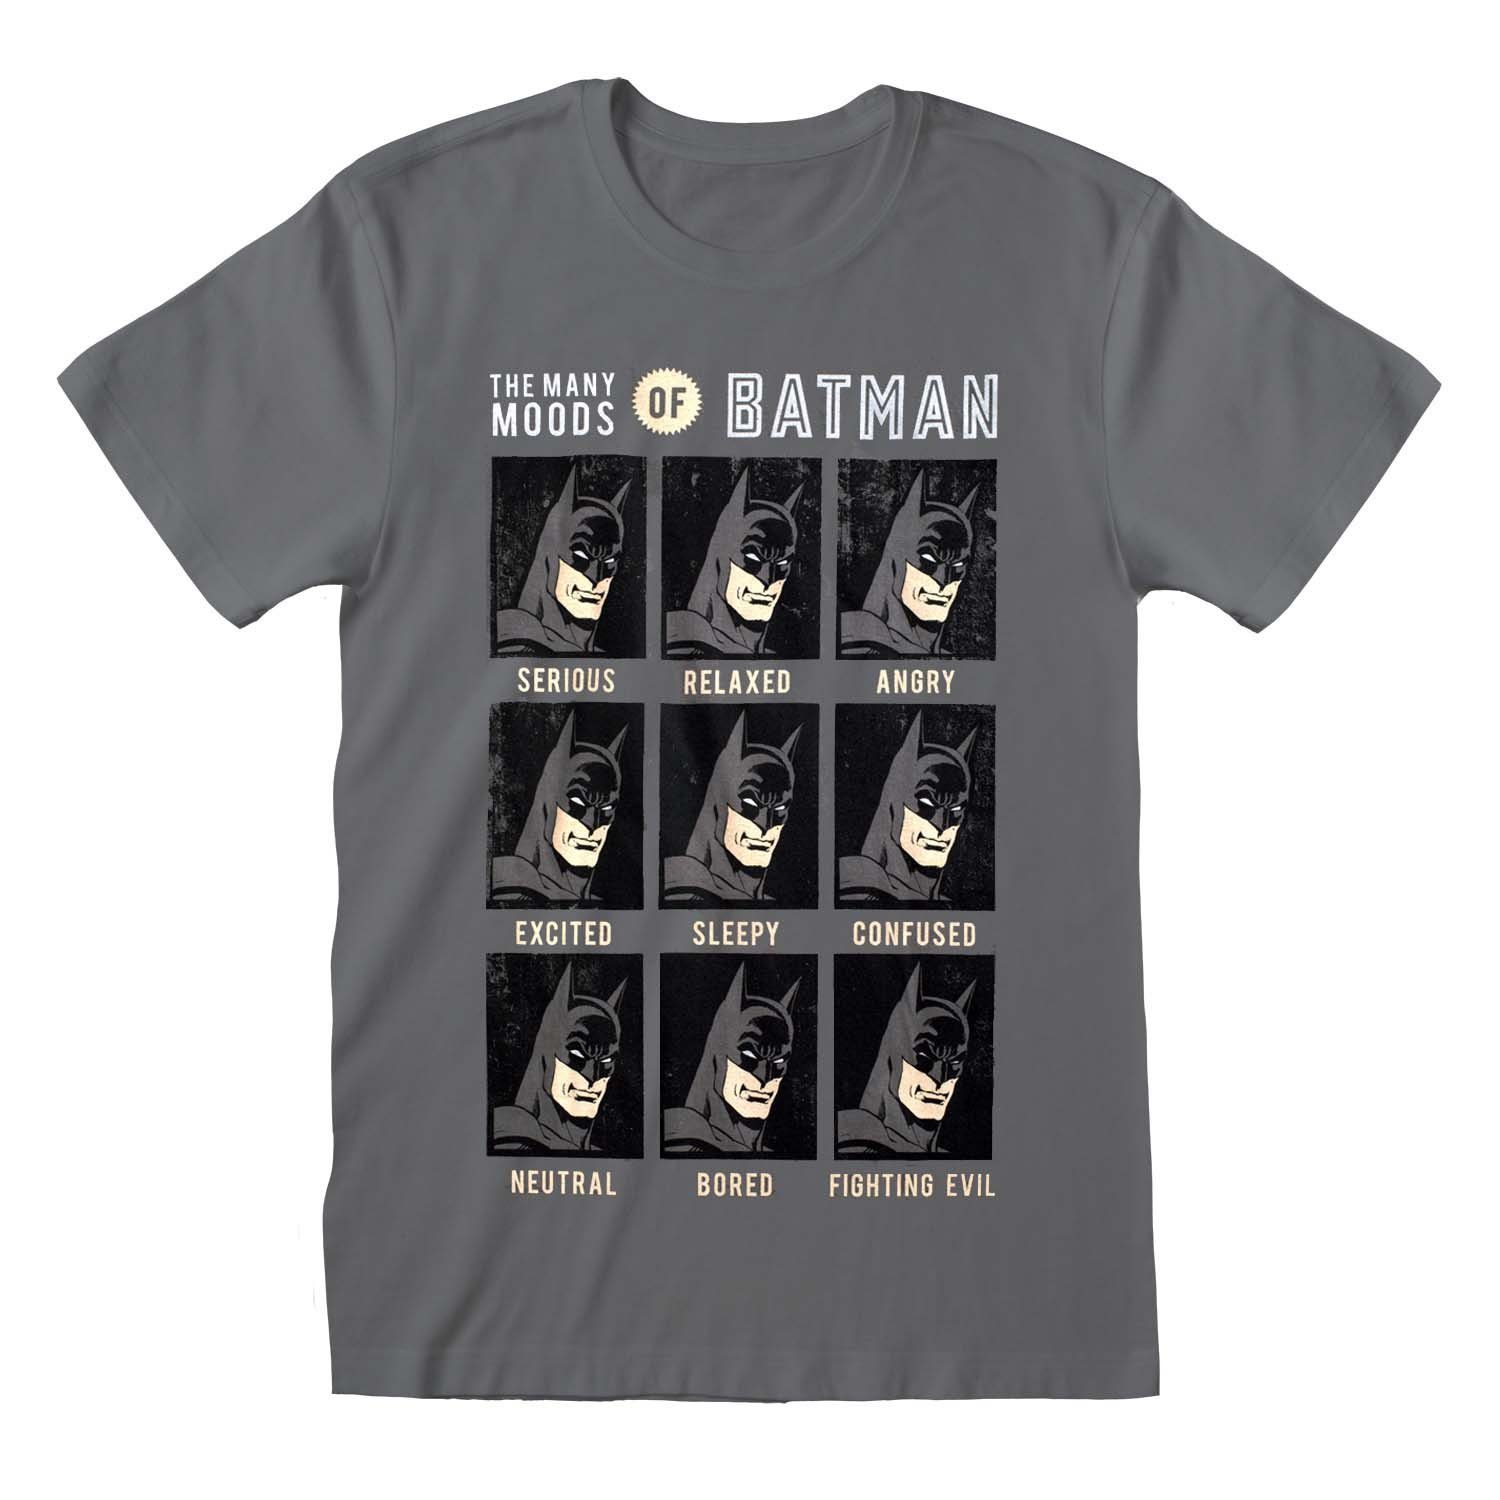 Heroes Inc T-Shirt DC Batman - Emotions Of Batman